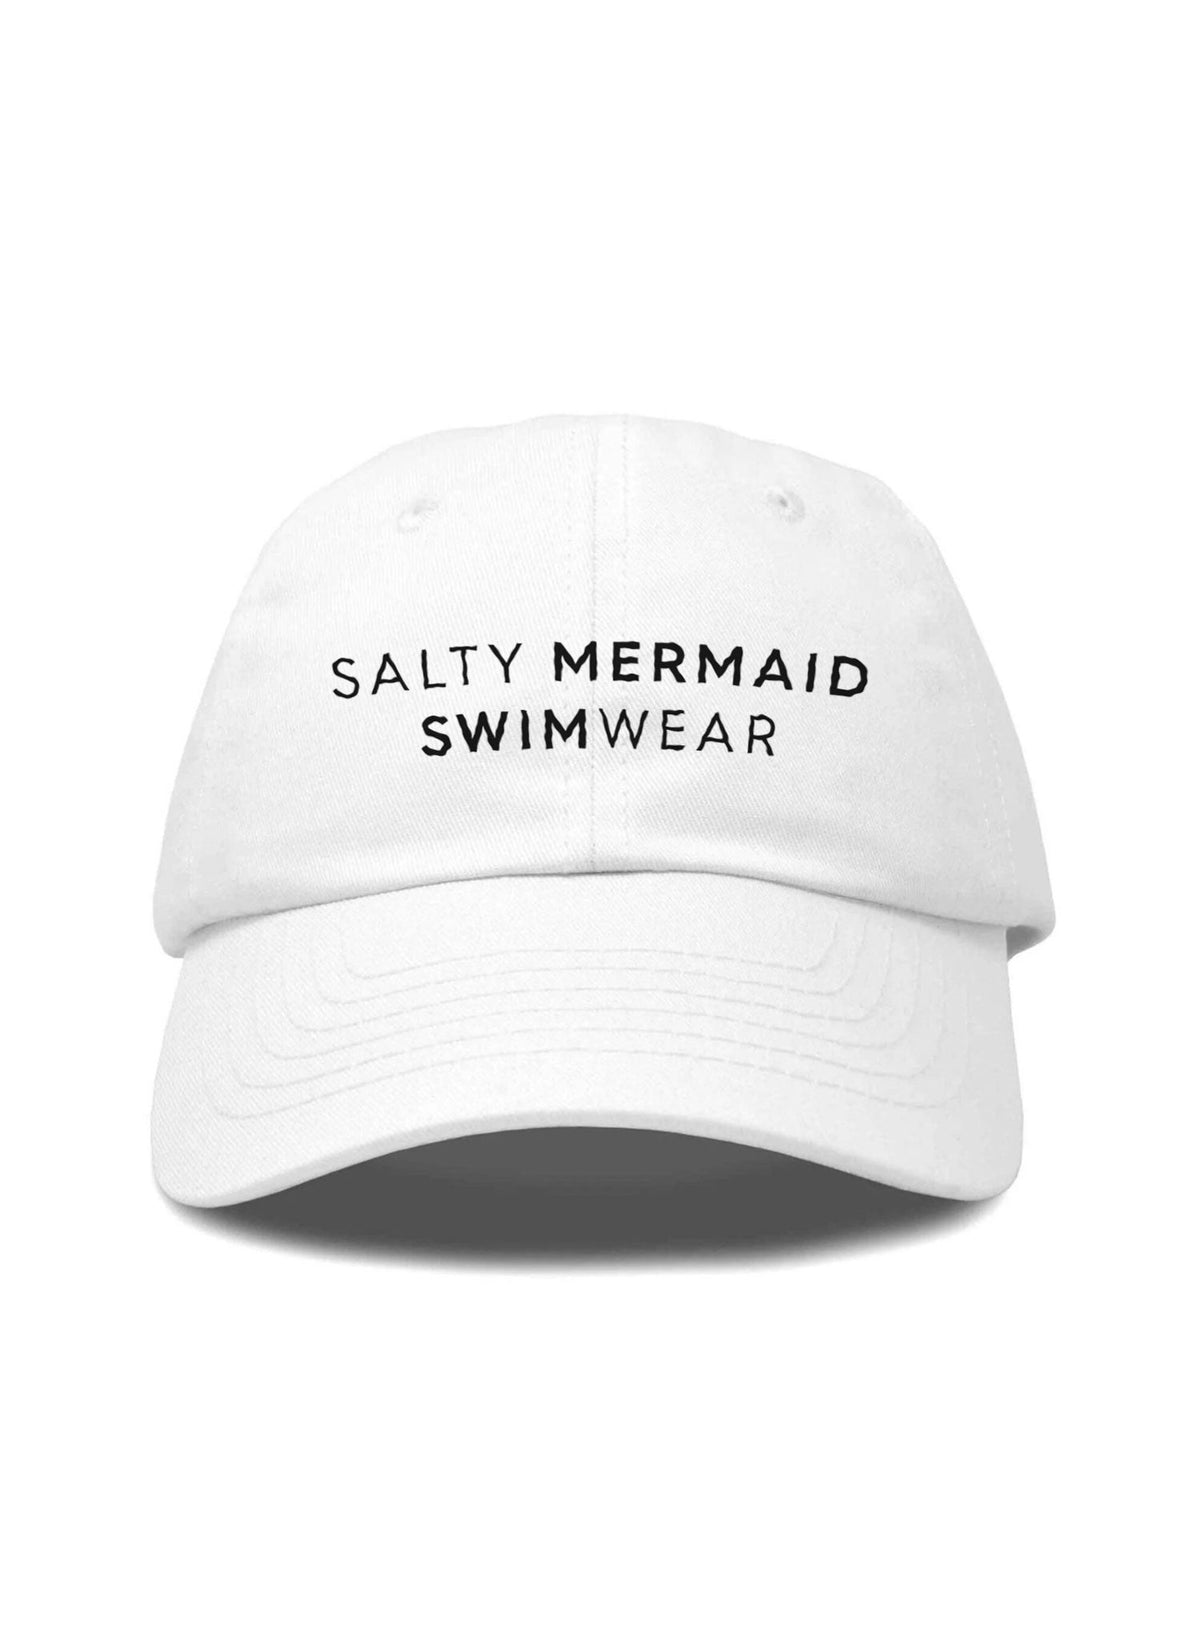 Salty Mermaid Swimwear Embroidered Hat